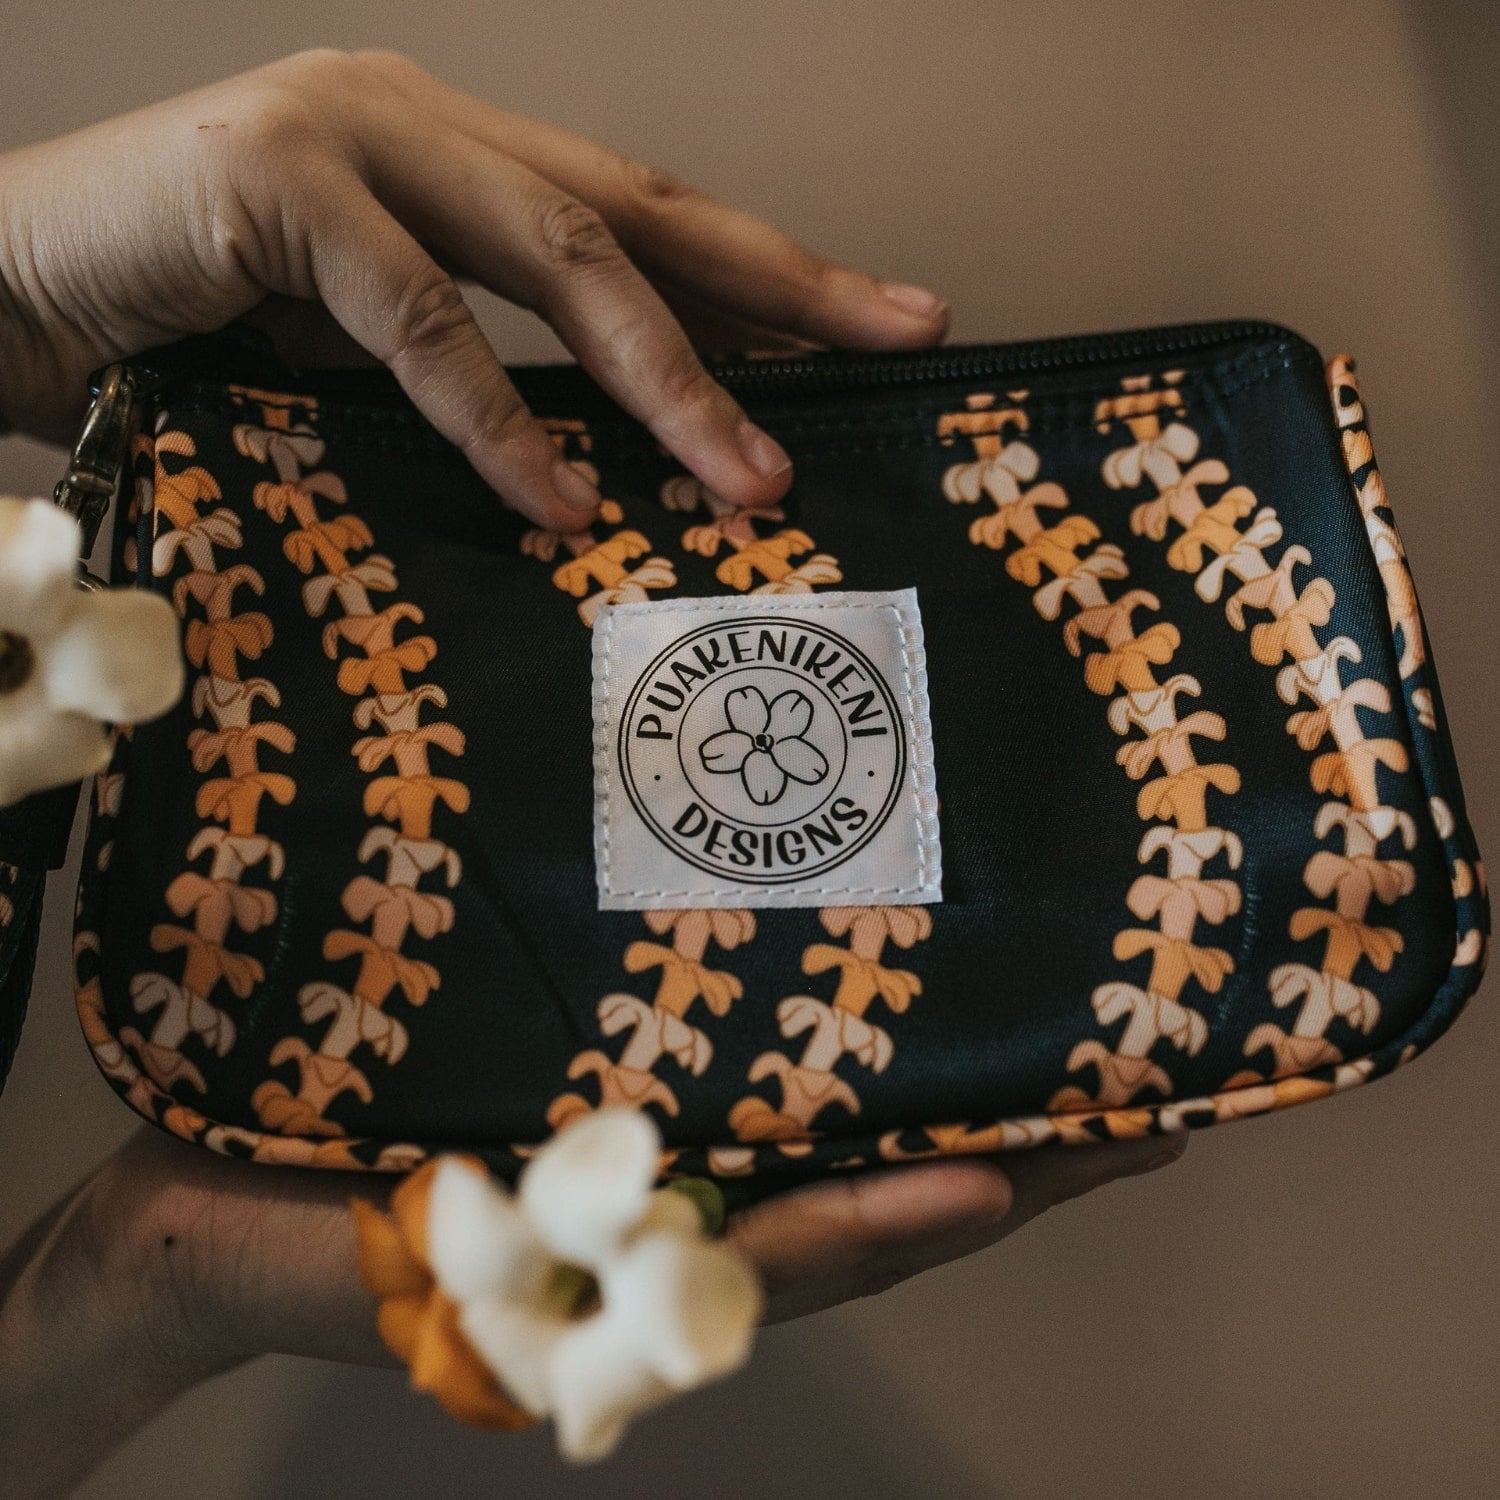 Mini Zipper Pouch - make-up bag, clutch, wristlet, with puakenikeni lei design from Puakenikeni Designs - model holding with pua kenikeni flowers